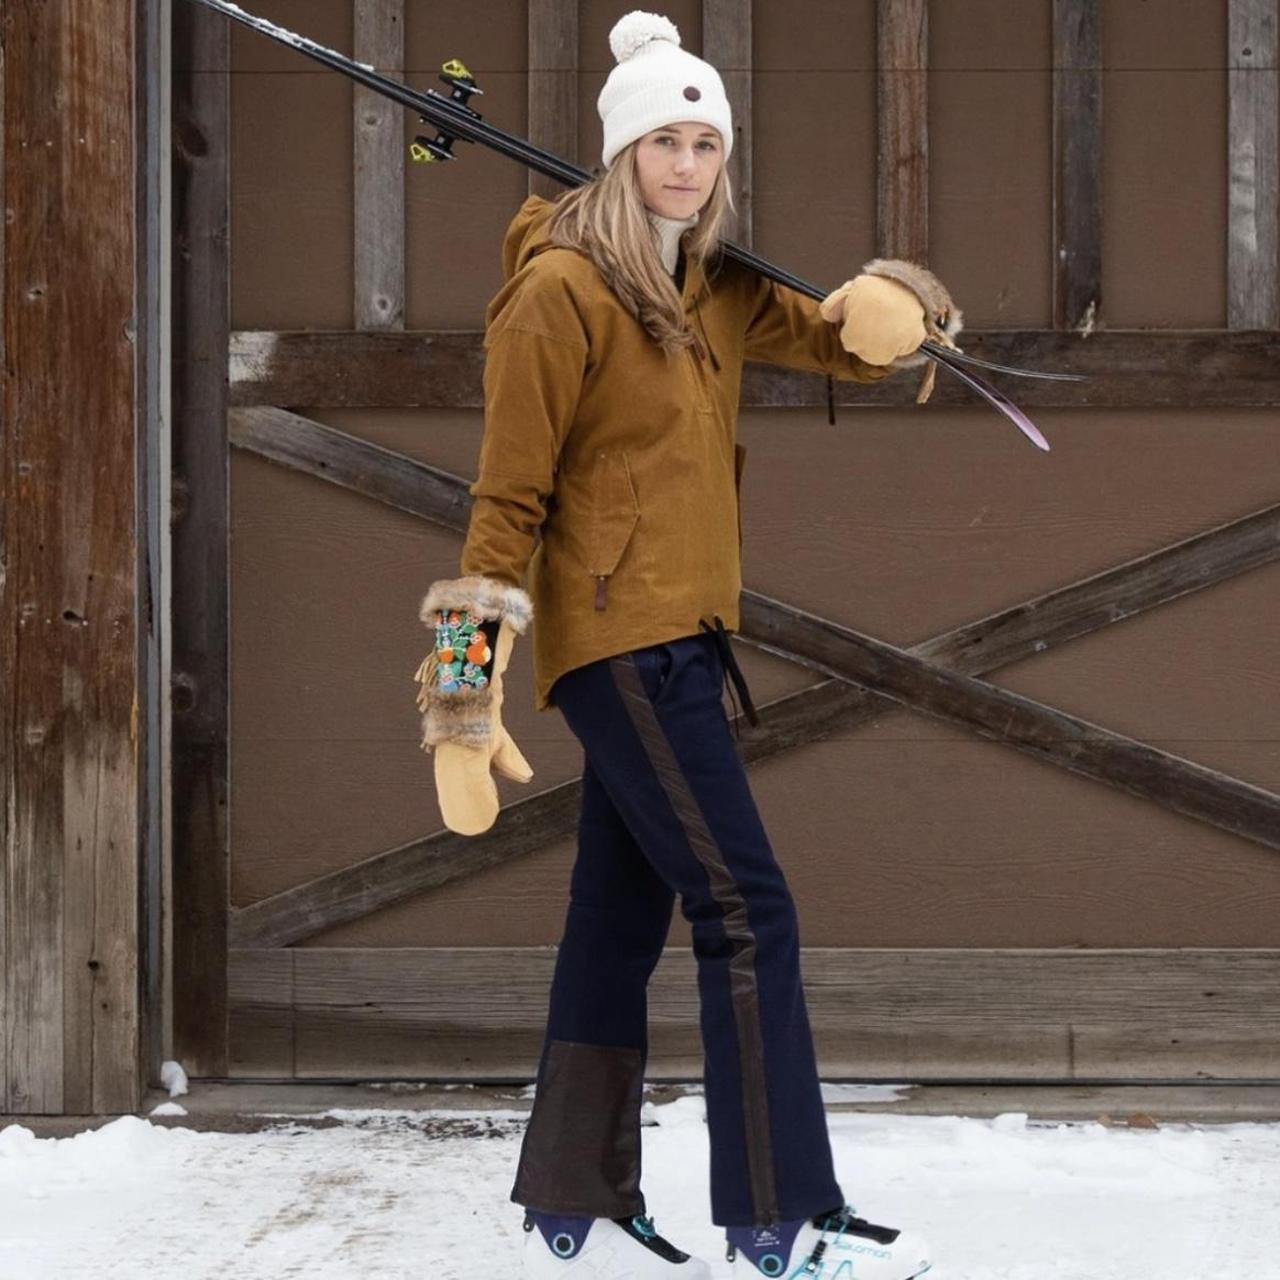 Nike Pants Womens Small Yellow Ski Snowboard Snow - Depop